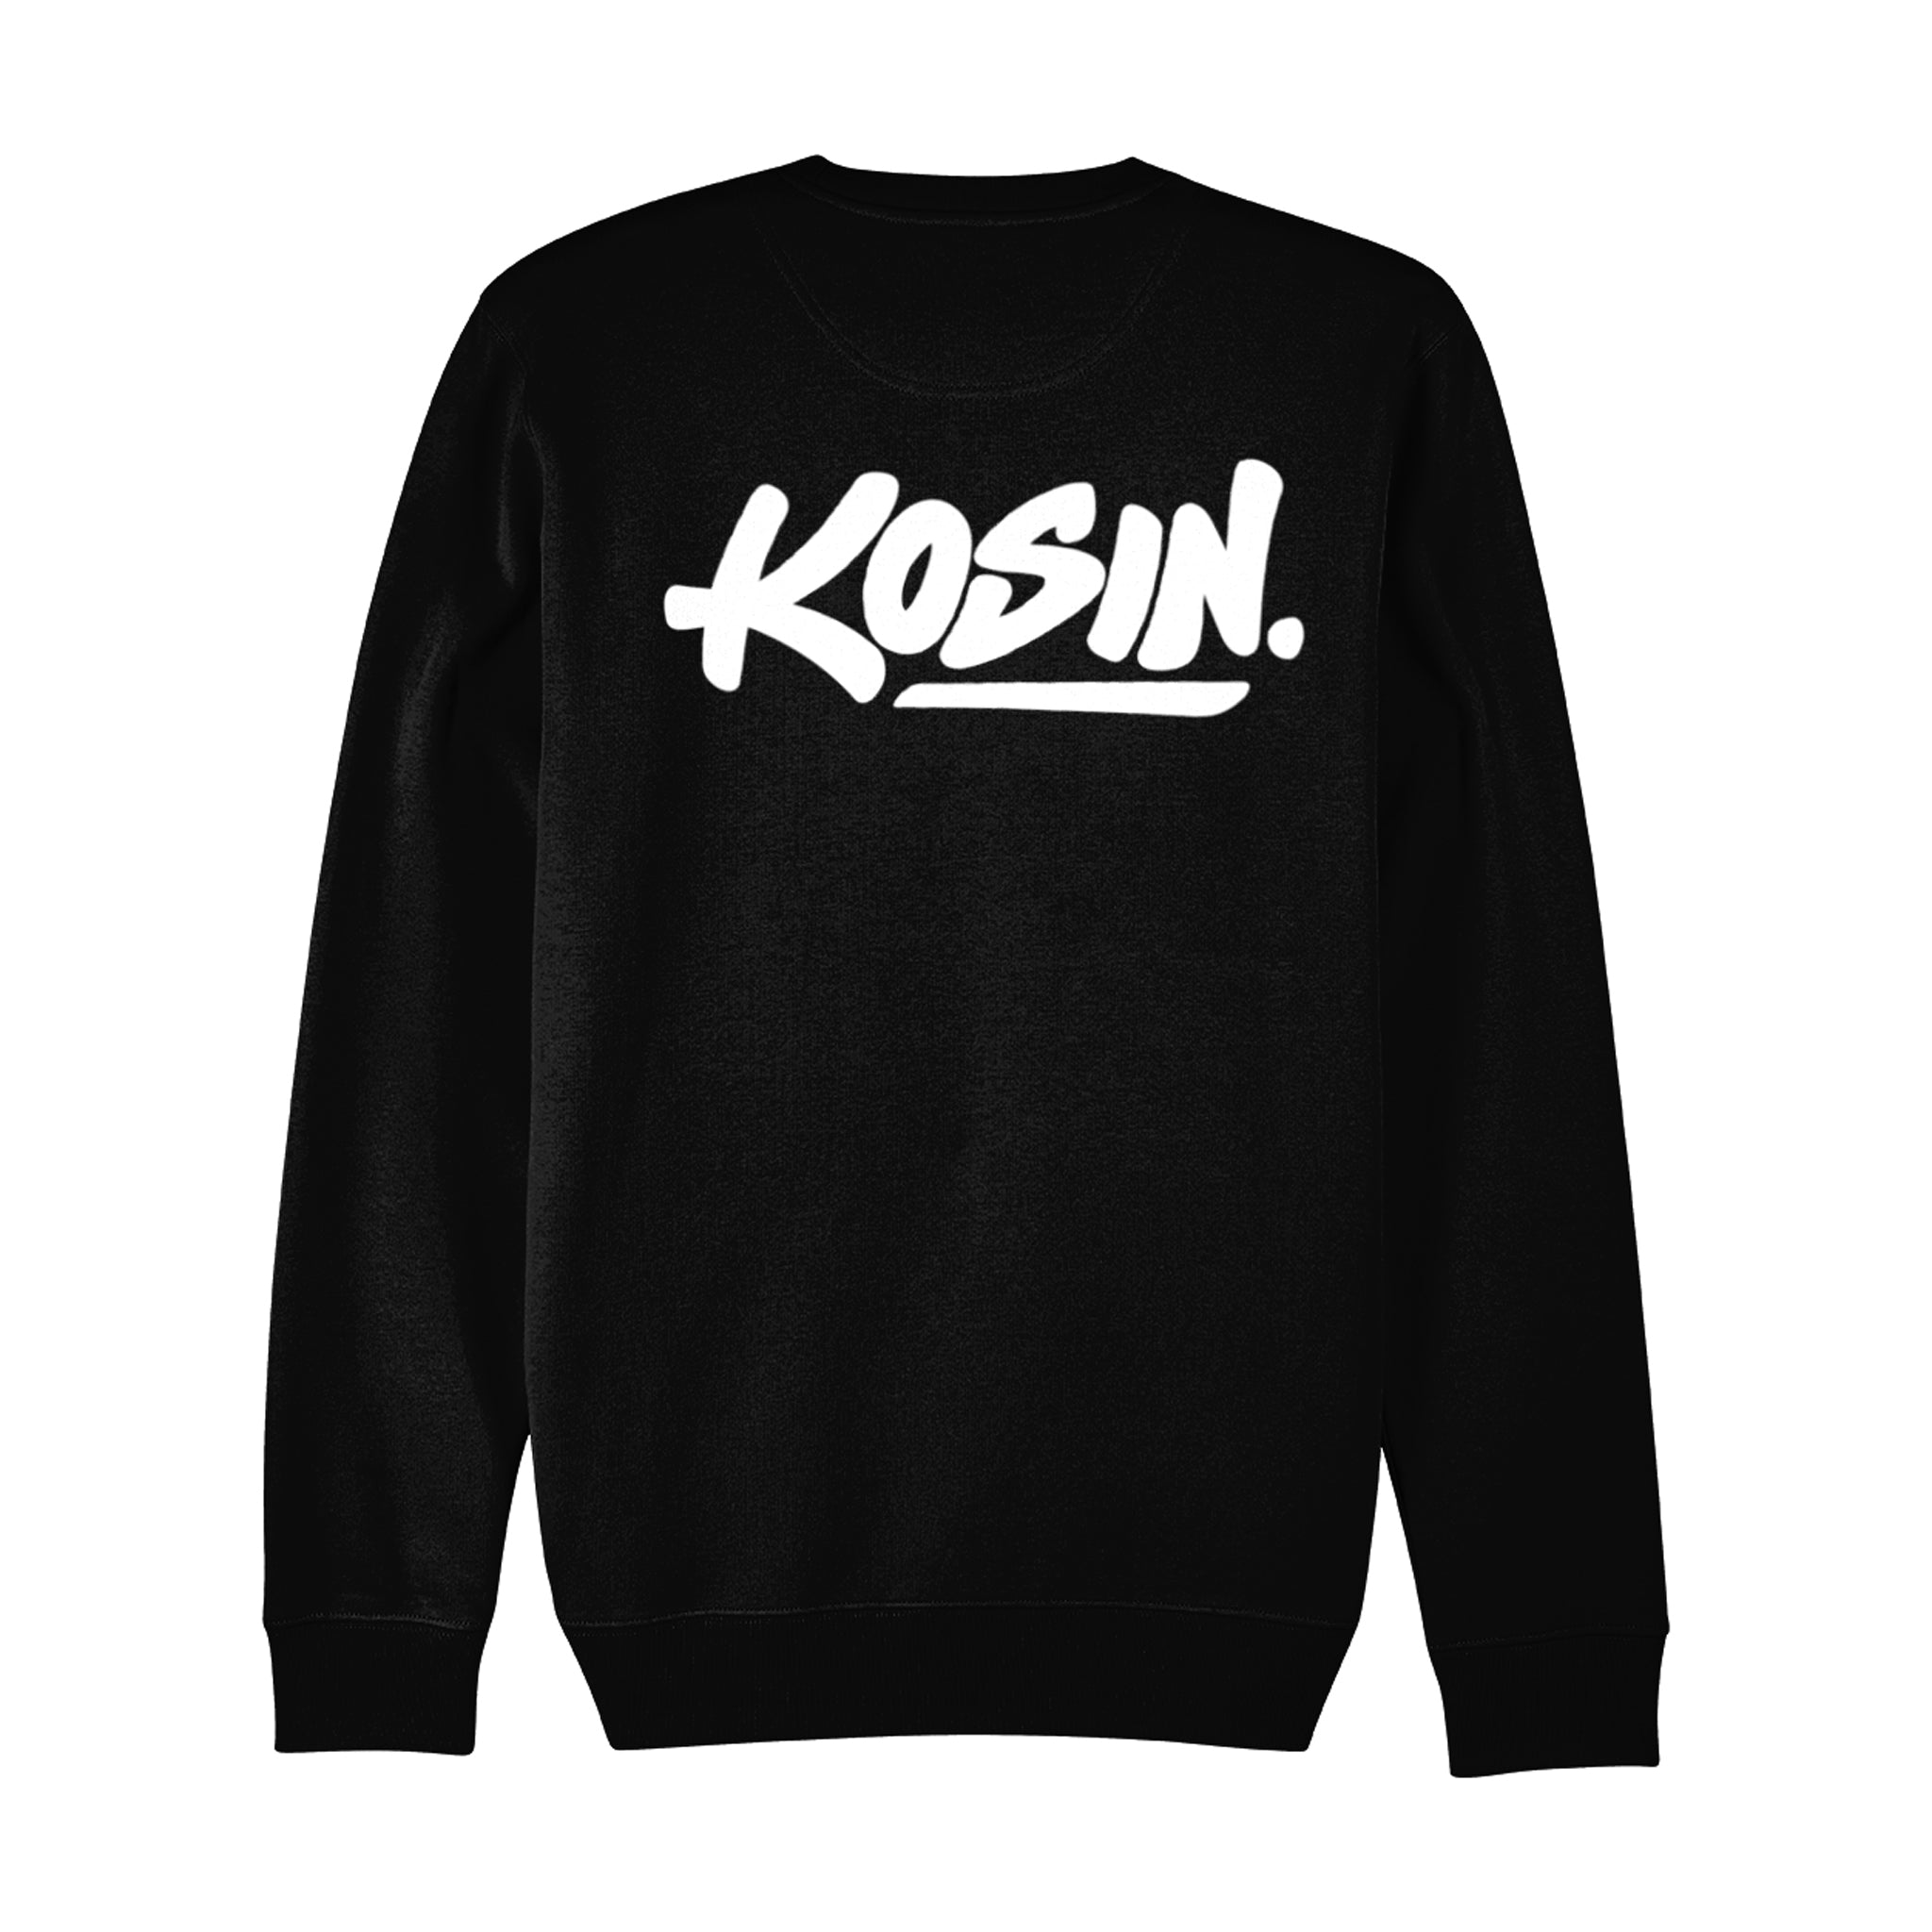 'Kosin Tag' Back Print Men's Sweatshirt